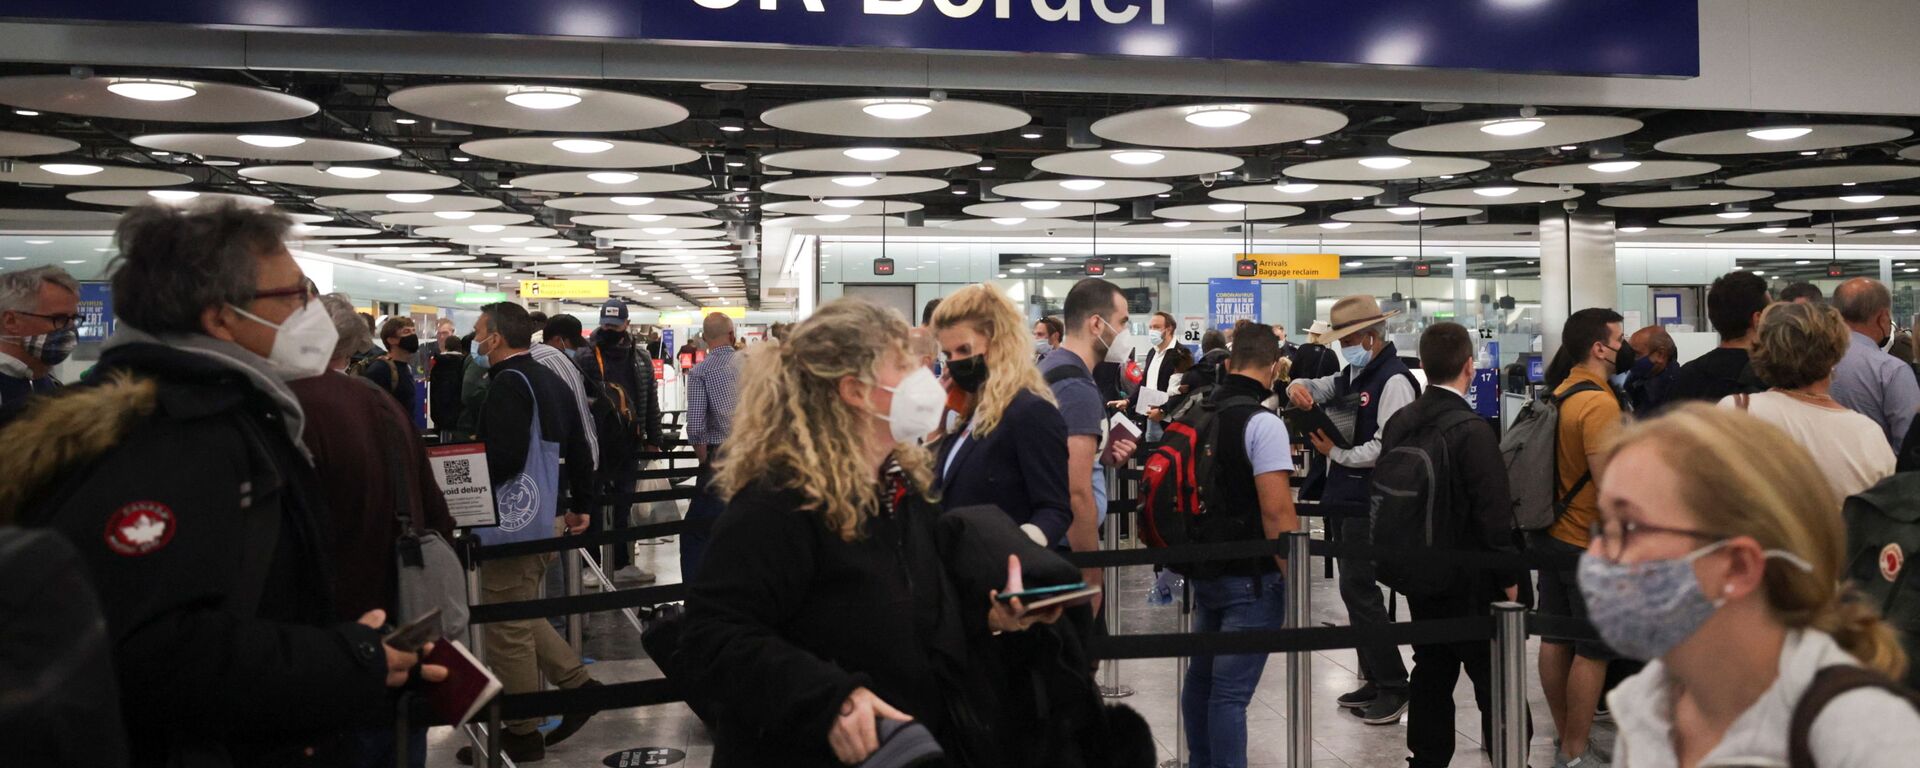 Arriving passengers queue at UK Border Control at the Terminal 5 at Heathrow Airport in London - Sputnik International, 1920, 02.08.2021